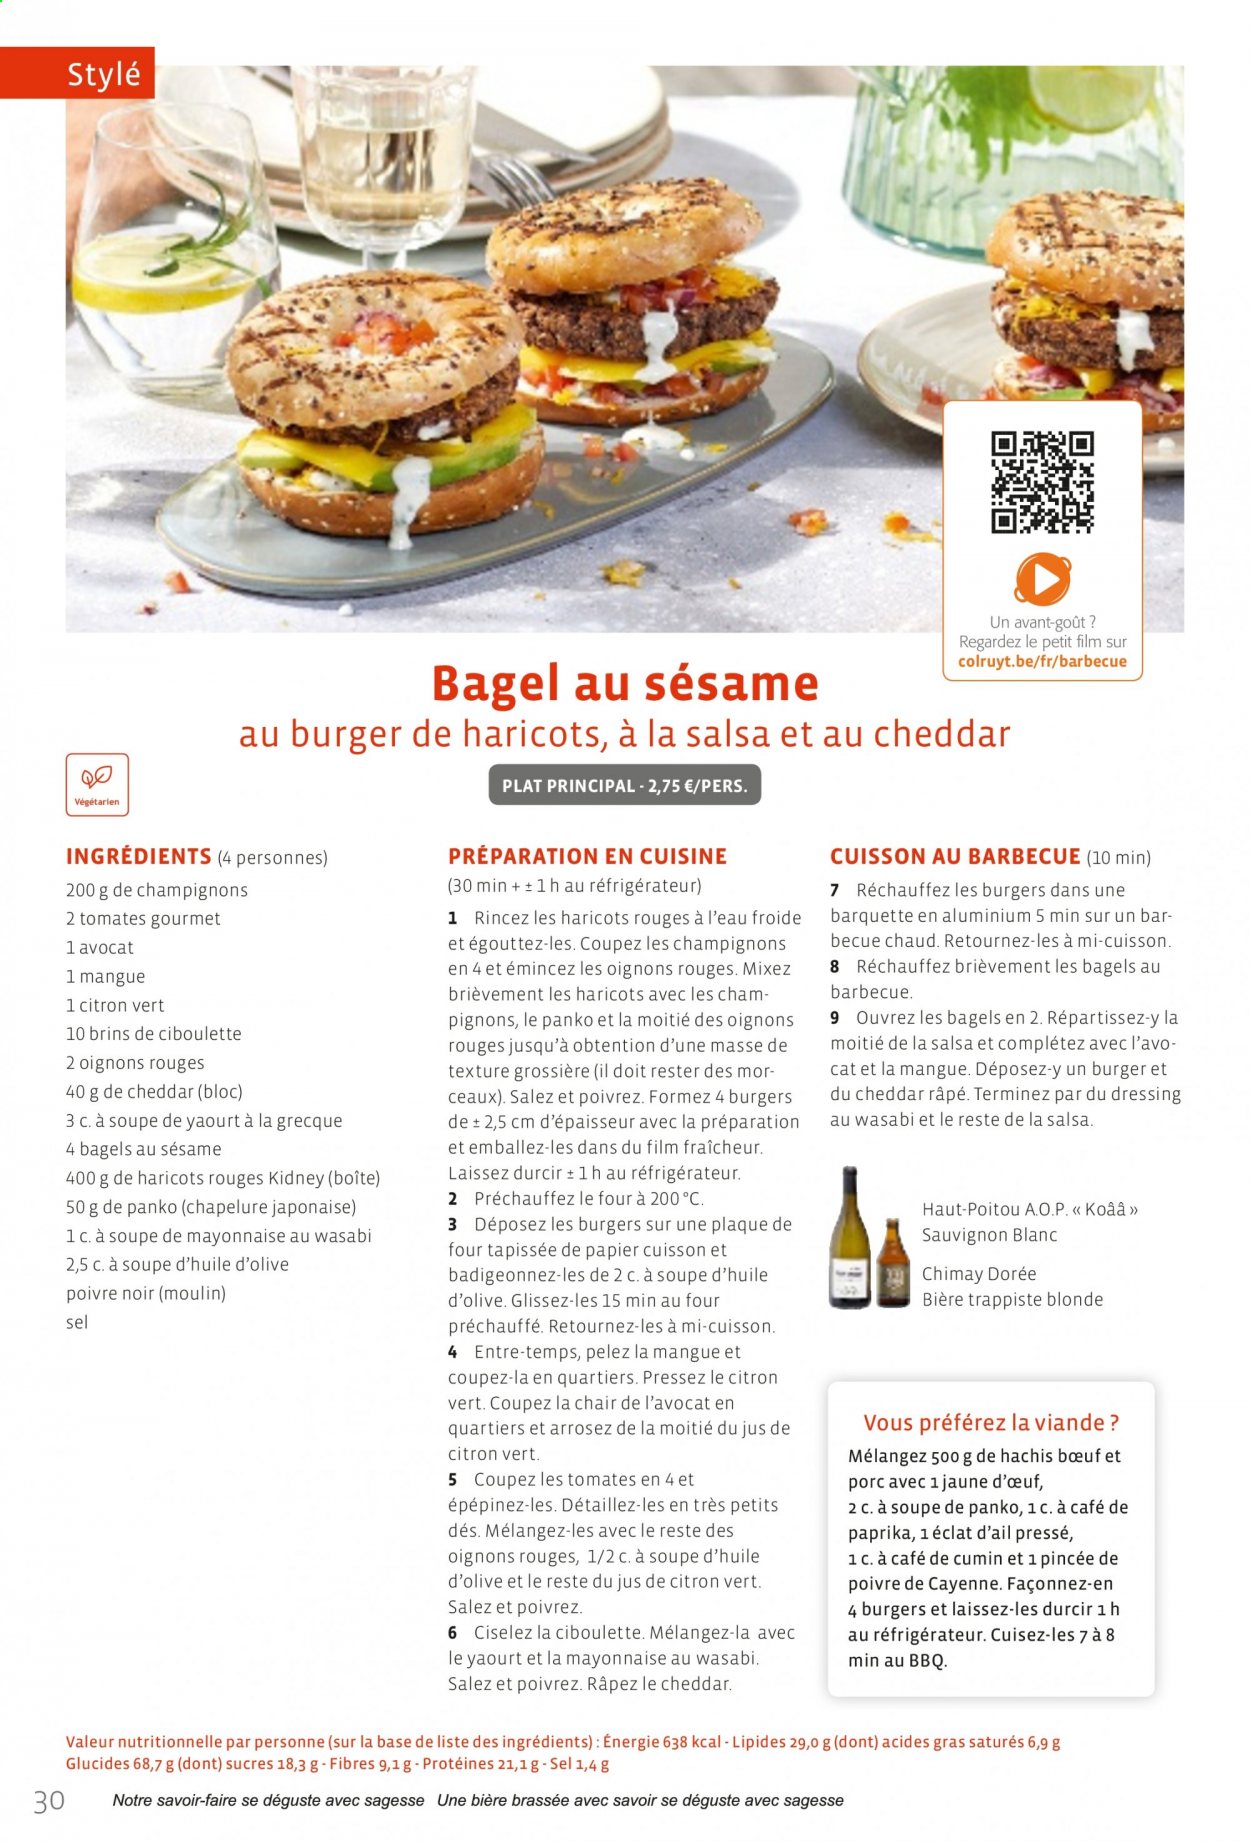 thumbnail - Colruyt-aanbieding -  producten in de aanbieding - bagels, Cheddar, panko, vegetarisch eten, Sauvignon Blanc, wasabi, BBQ. Pagina 30.